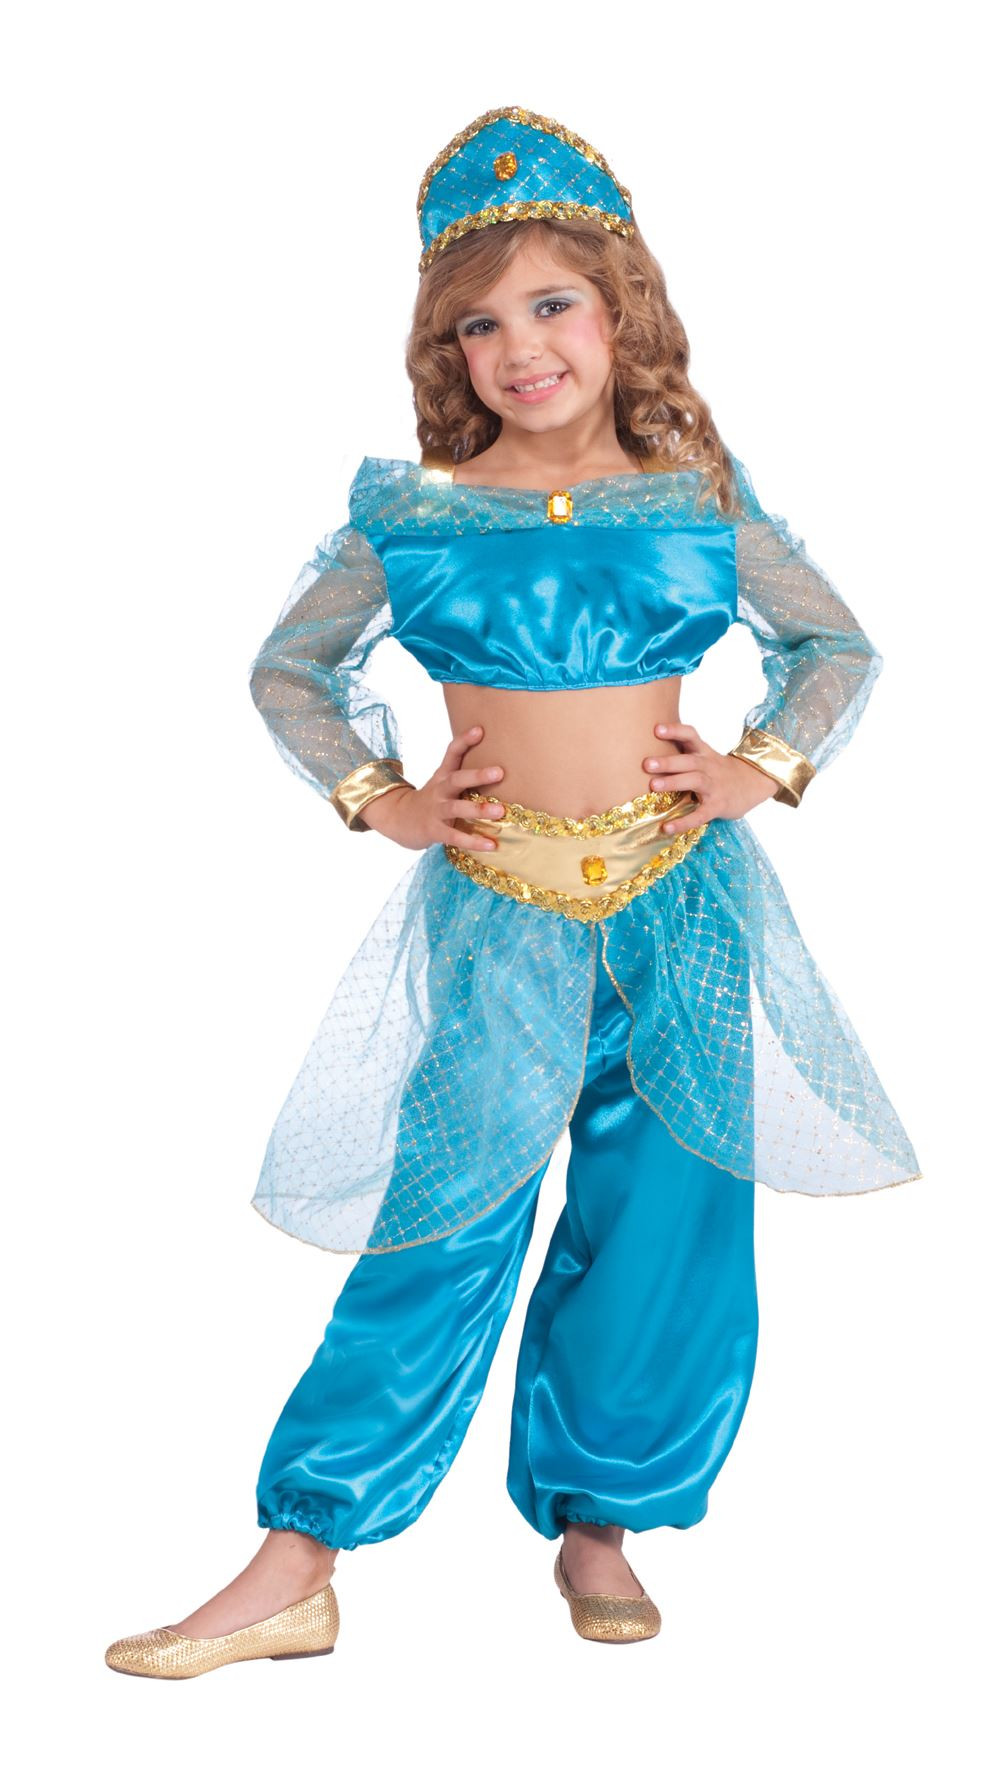 Best ideas about Princess Jasmine DIY Costume
. Save or Pin Girls Arabian Princess Jasmine Costume Now.